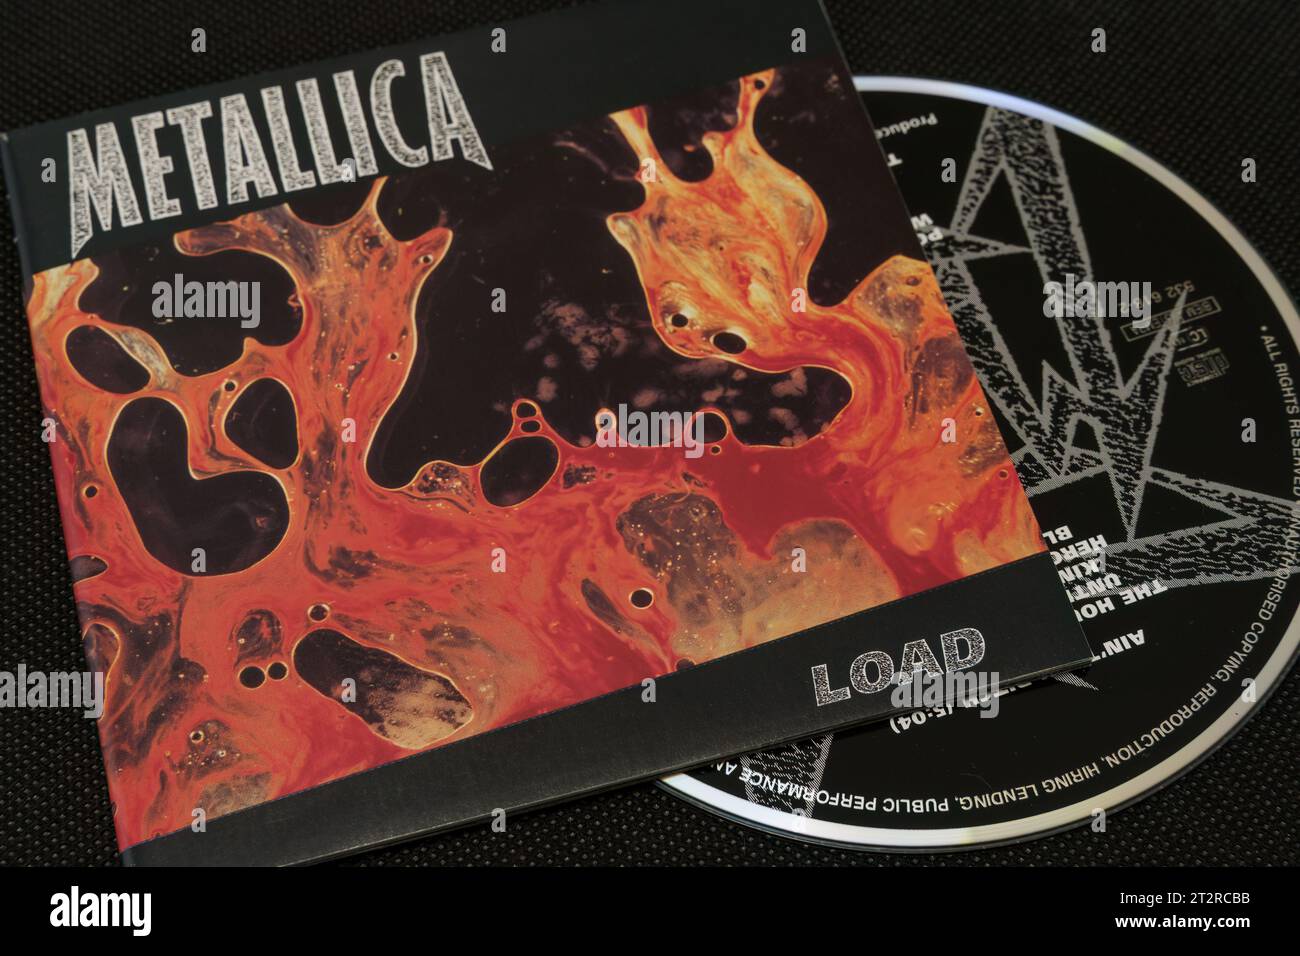 Metallica - Metallica (The Black Album) (CD) - Metal / Hard Rock - CD